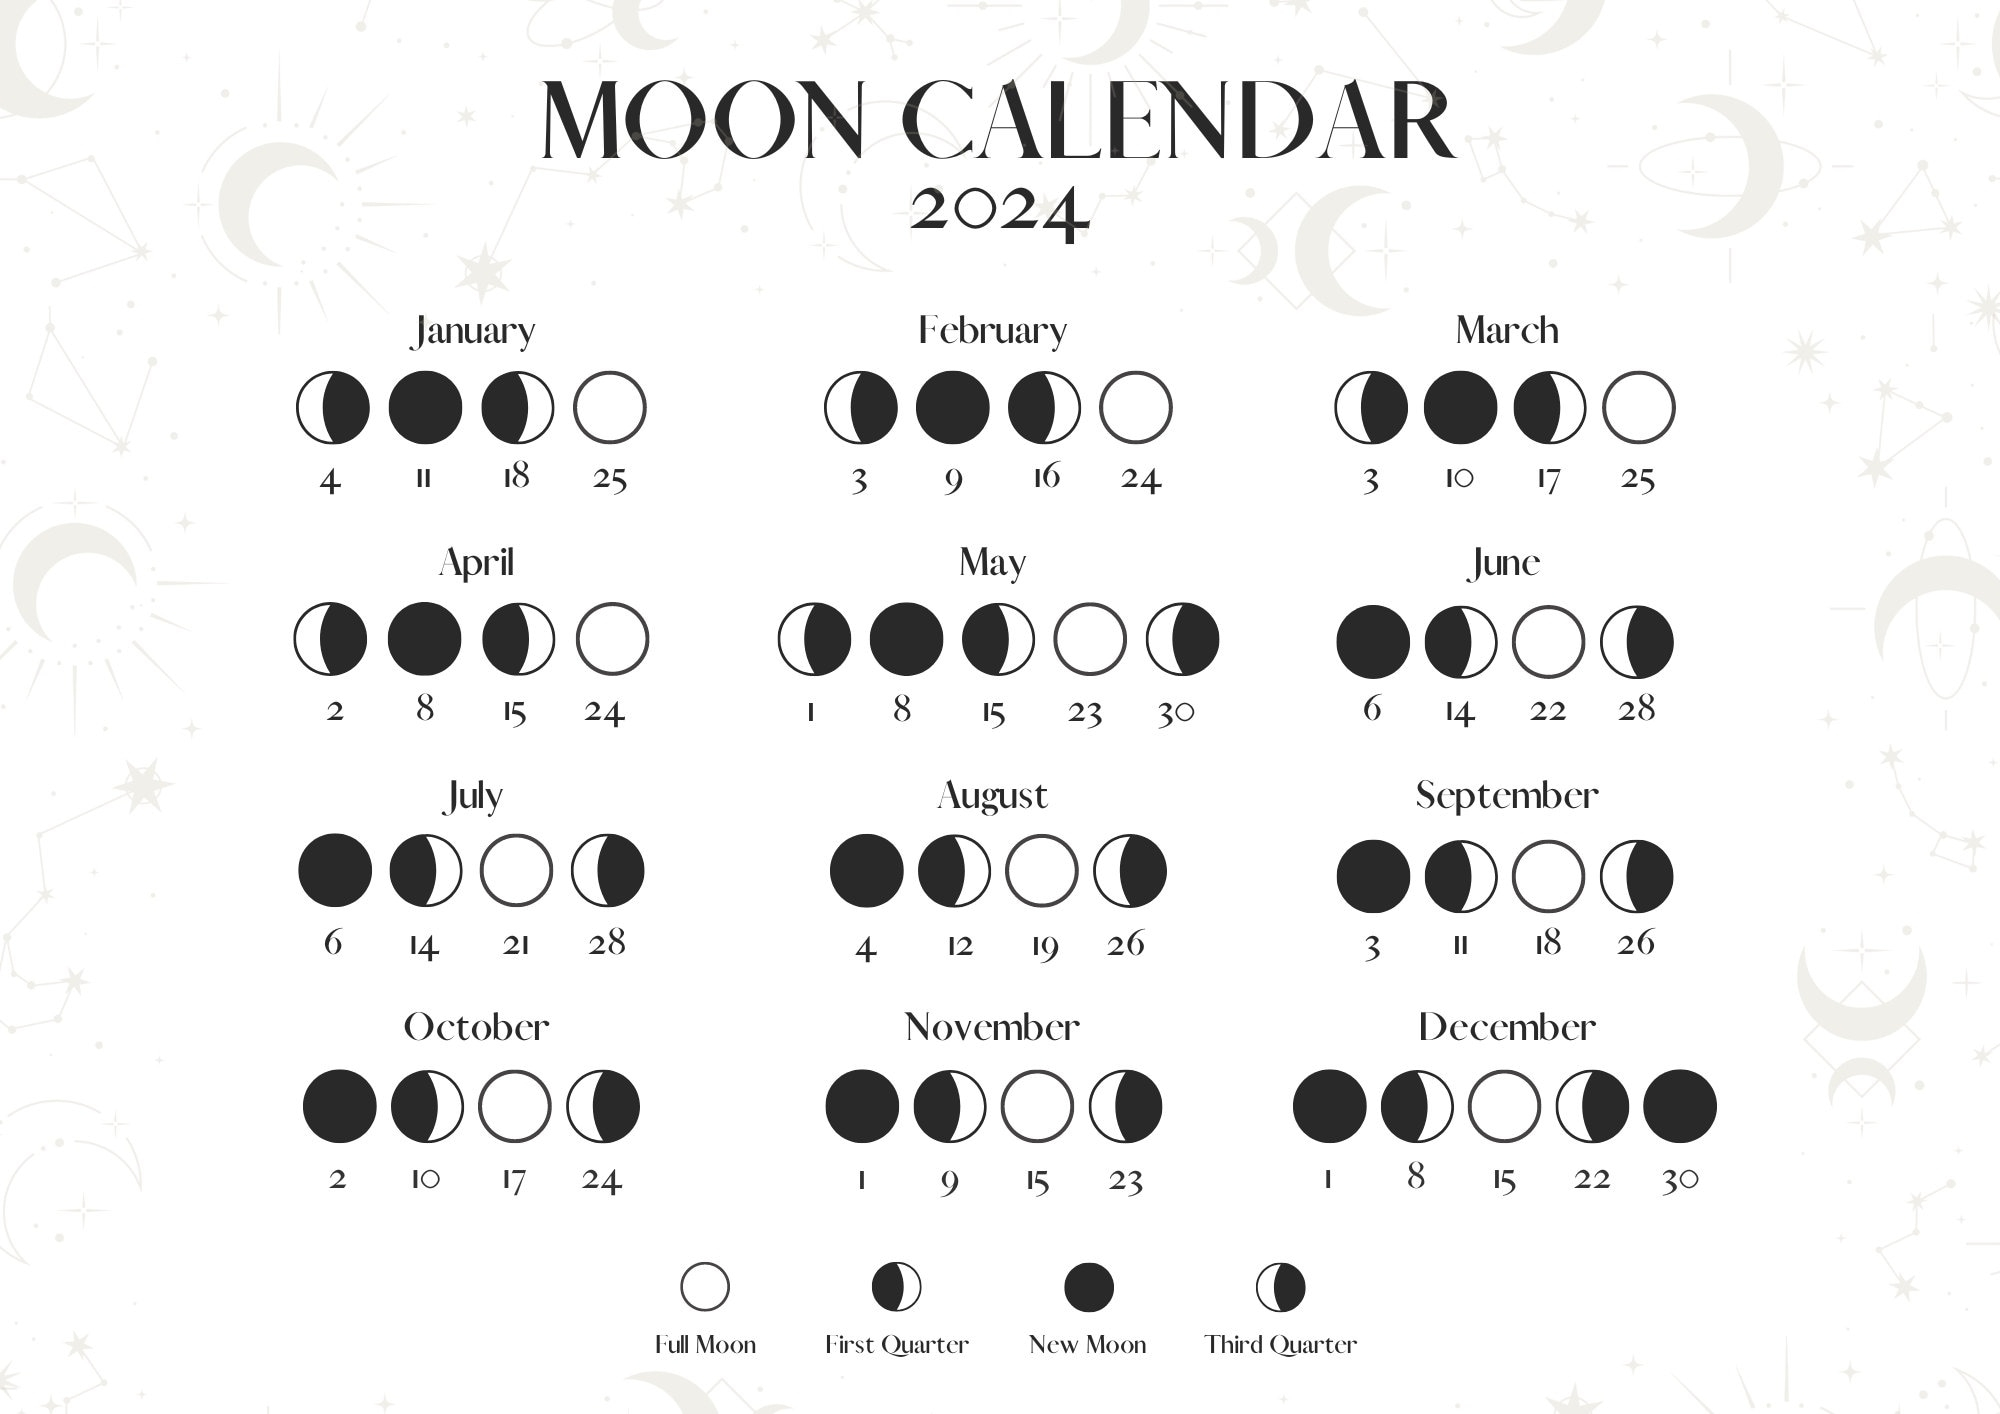 Moon Calendar 2024 Moon Phases Lunar Calendar Printable In A4 - Etsy for Calendar With Moon Phases 2024 Printable